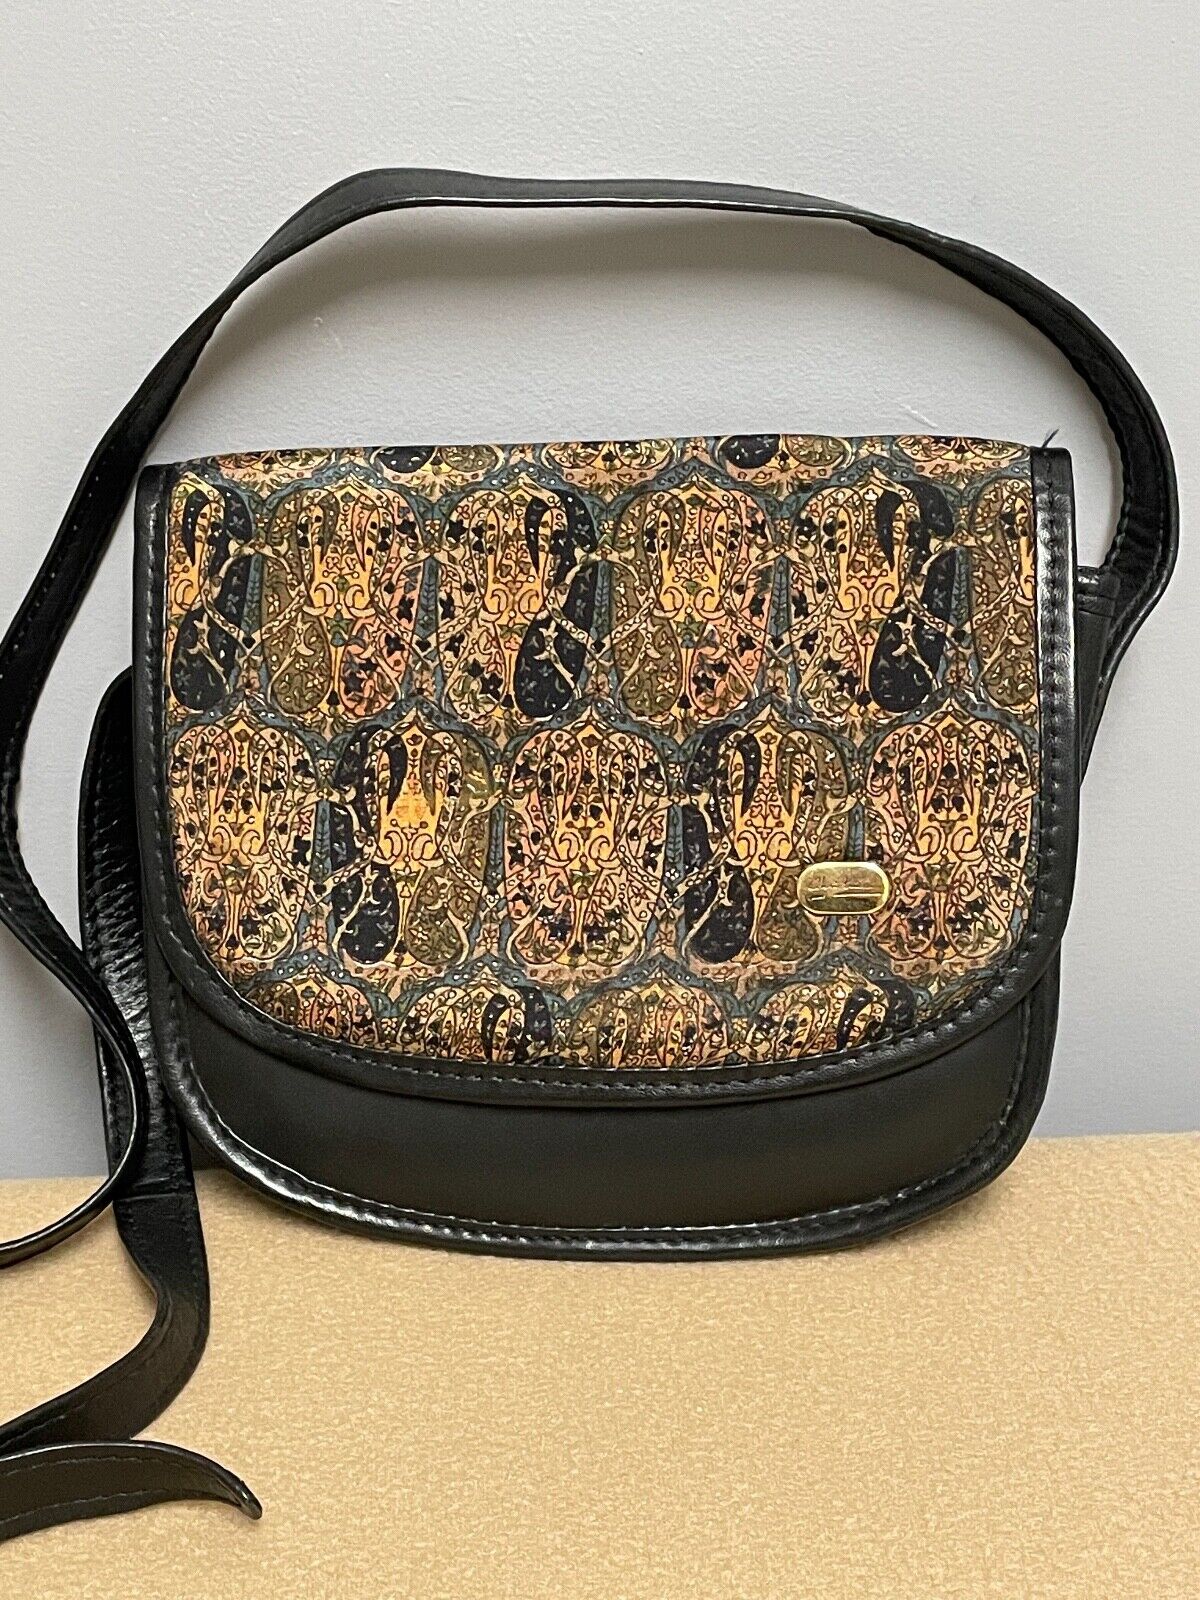 Christina Max Direct stock discount 83% OFF Leather Silk Black Shoulder Handbag